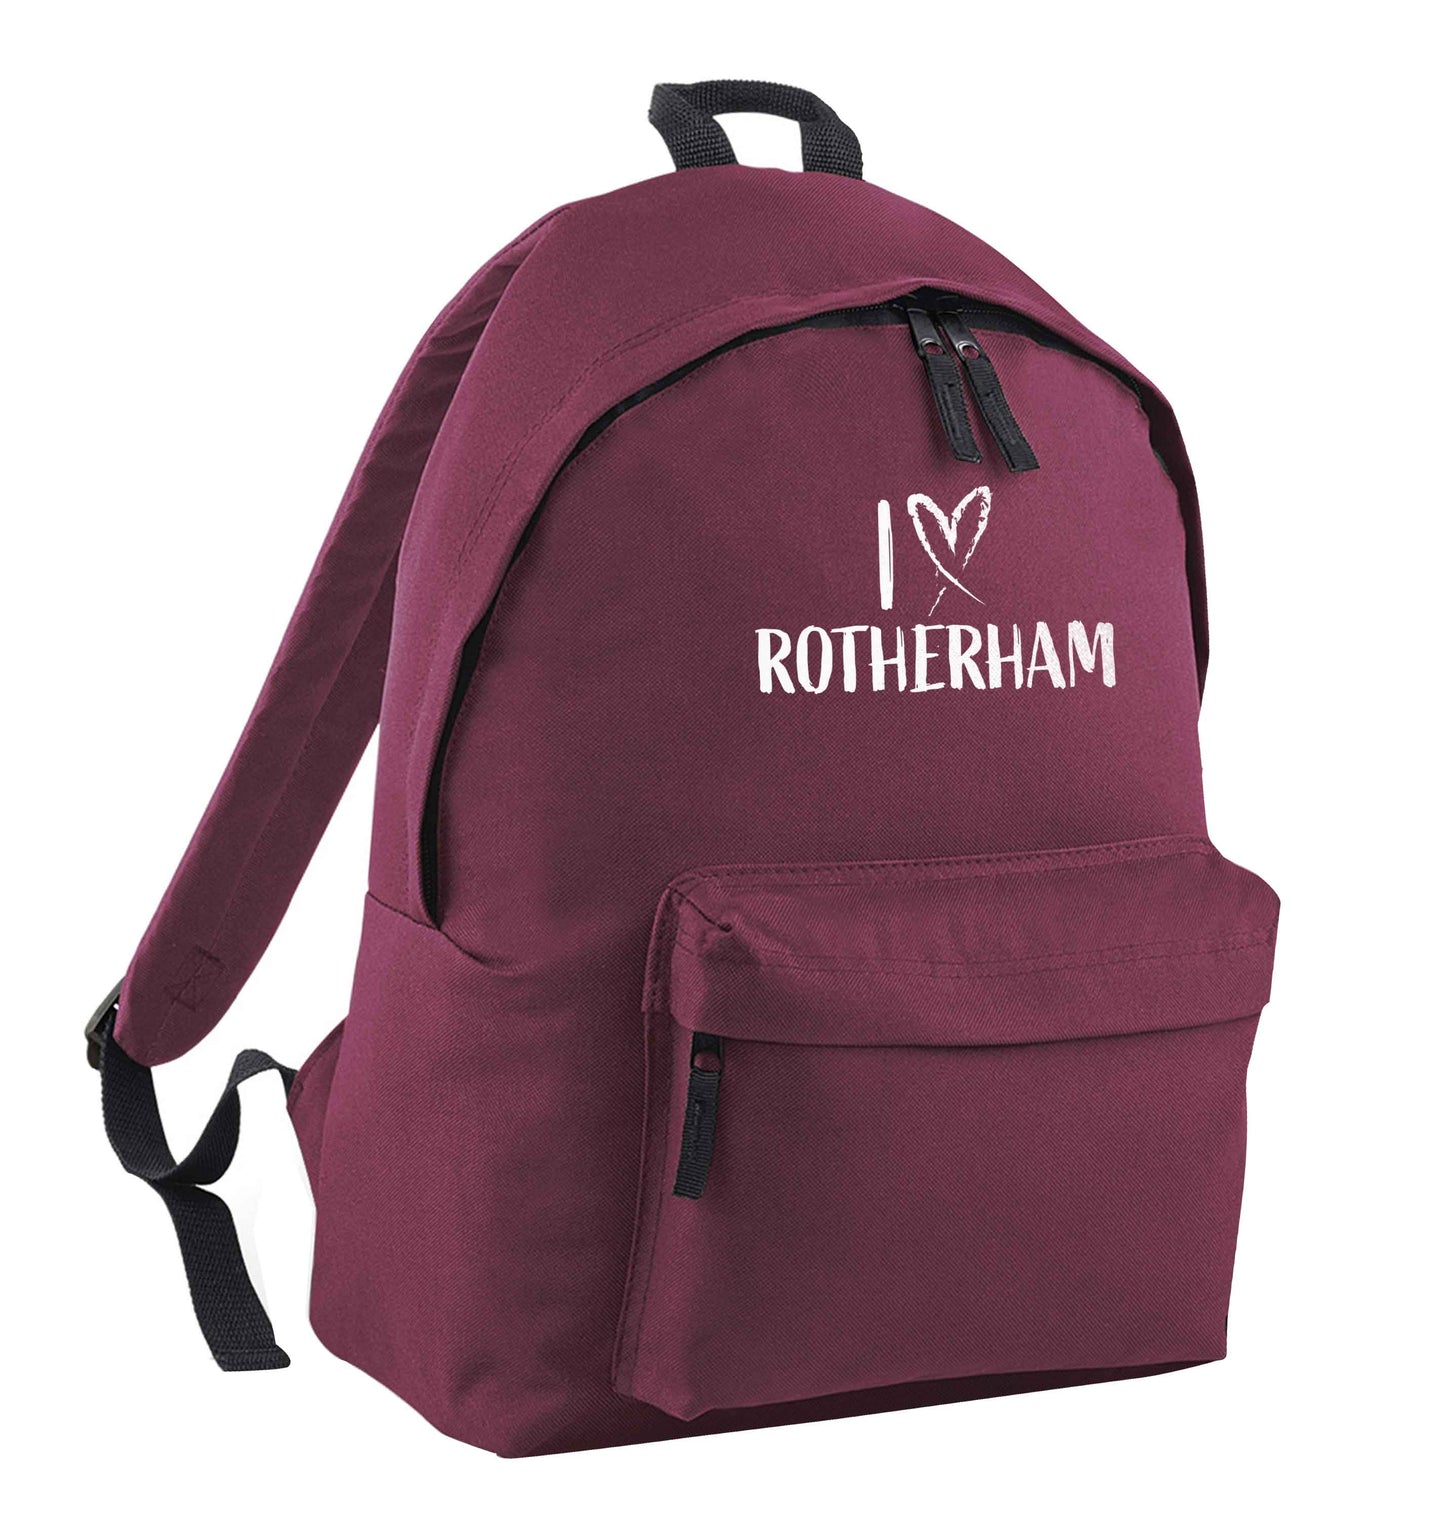 I love Rotherham maroon adults backpack